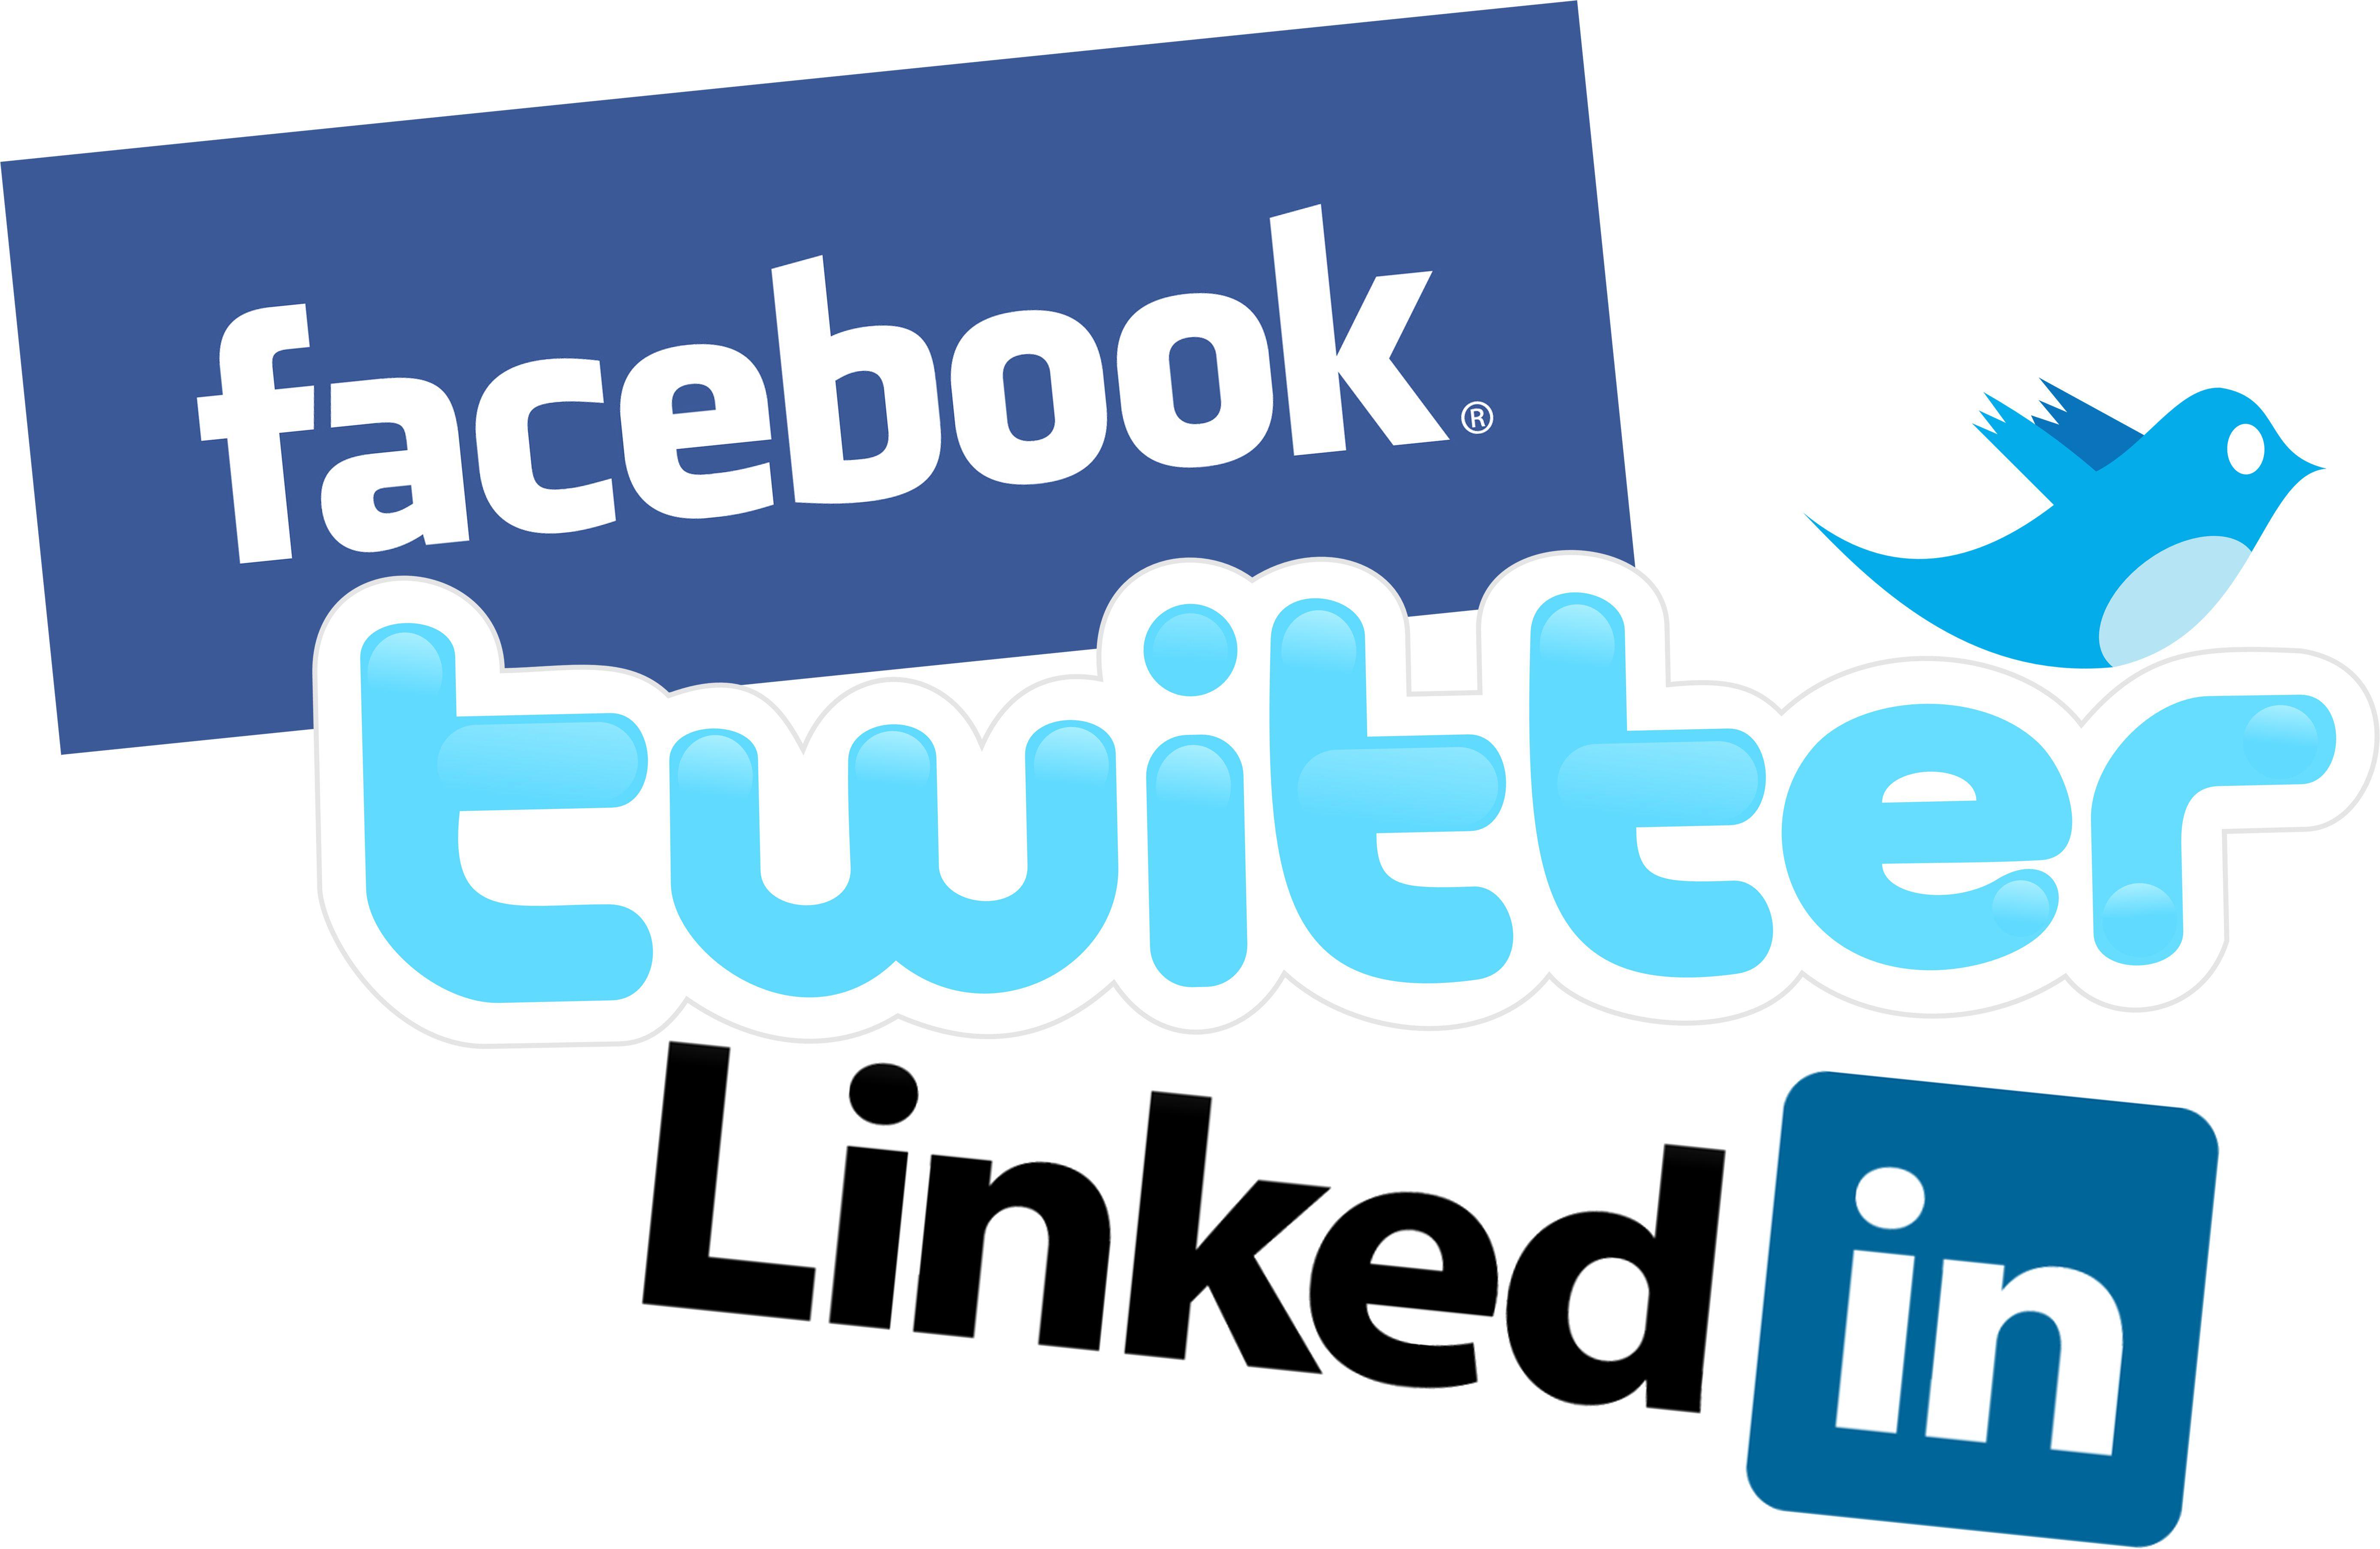 Facebook Twitter LinkedIn Logo - article on how to delete gmail, facebook, twitter, and linkedin ...